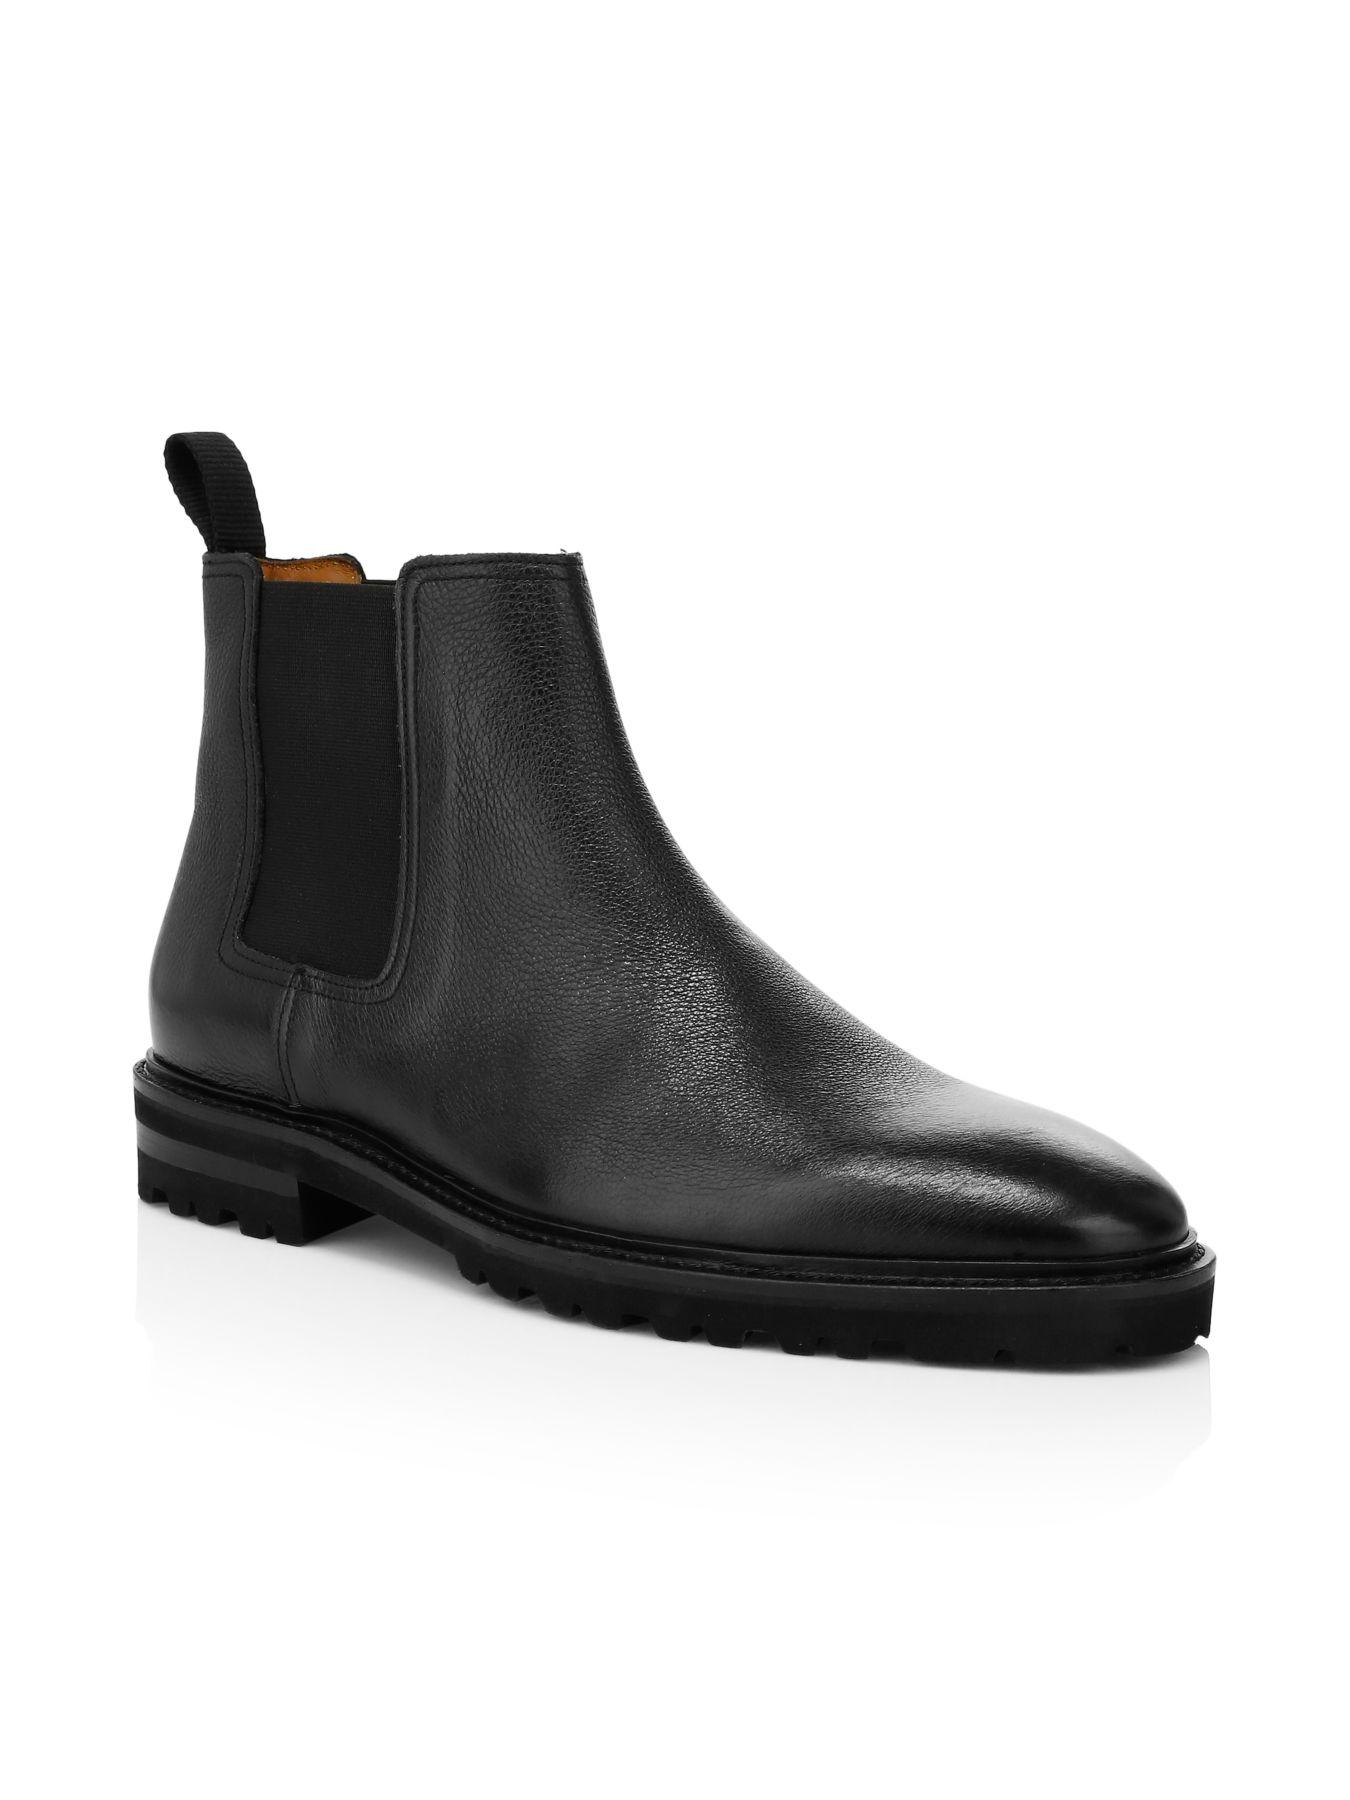 Aquatalia Leather Leighton Chelsea Boots in Black for Men - Lyst